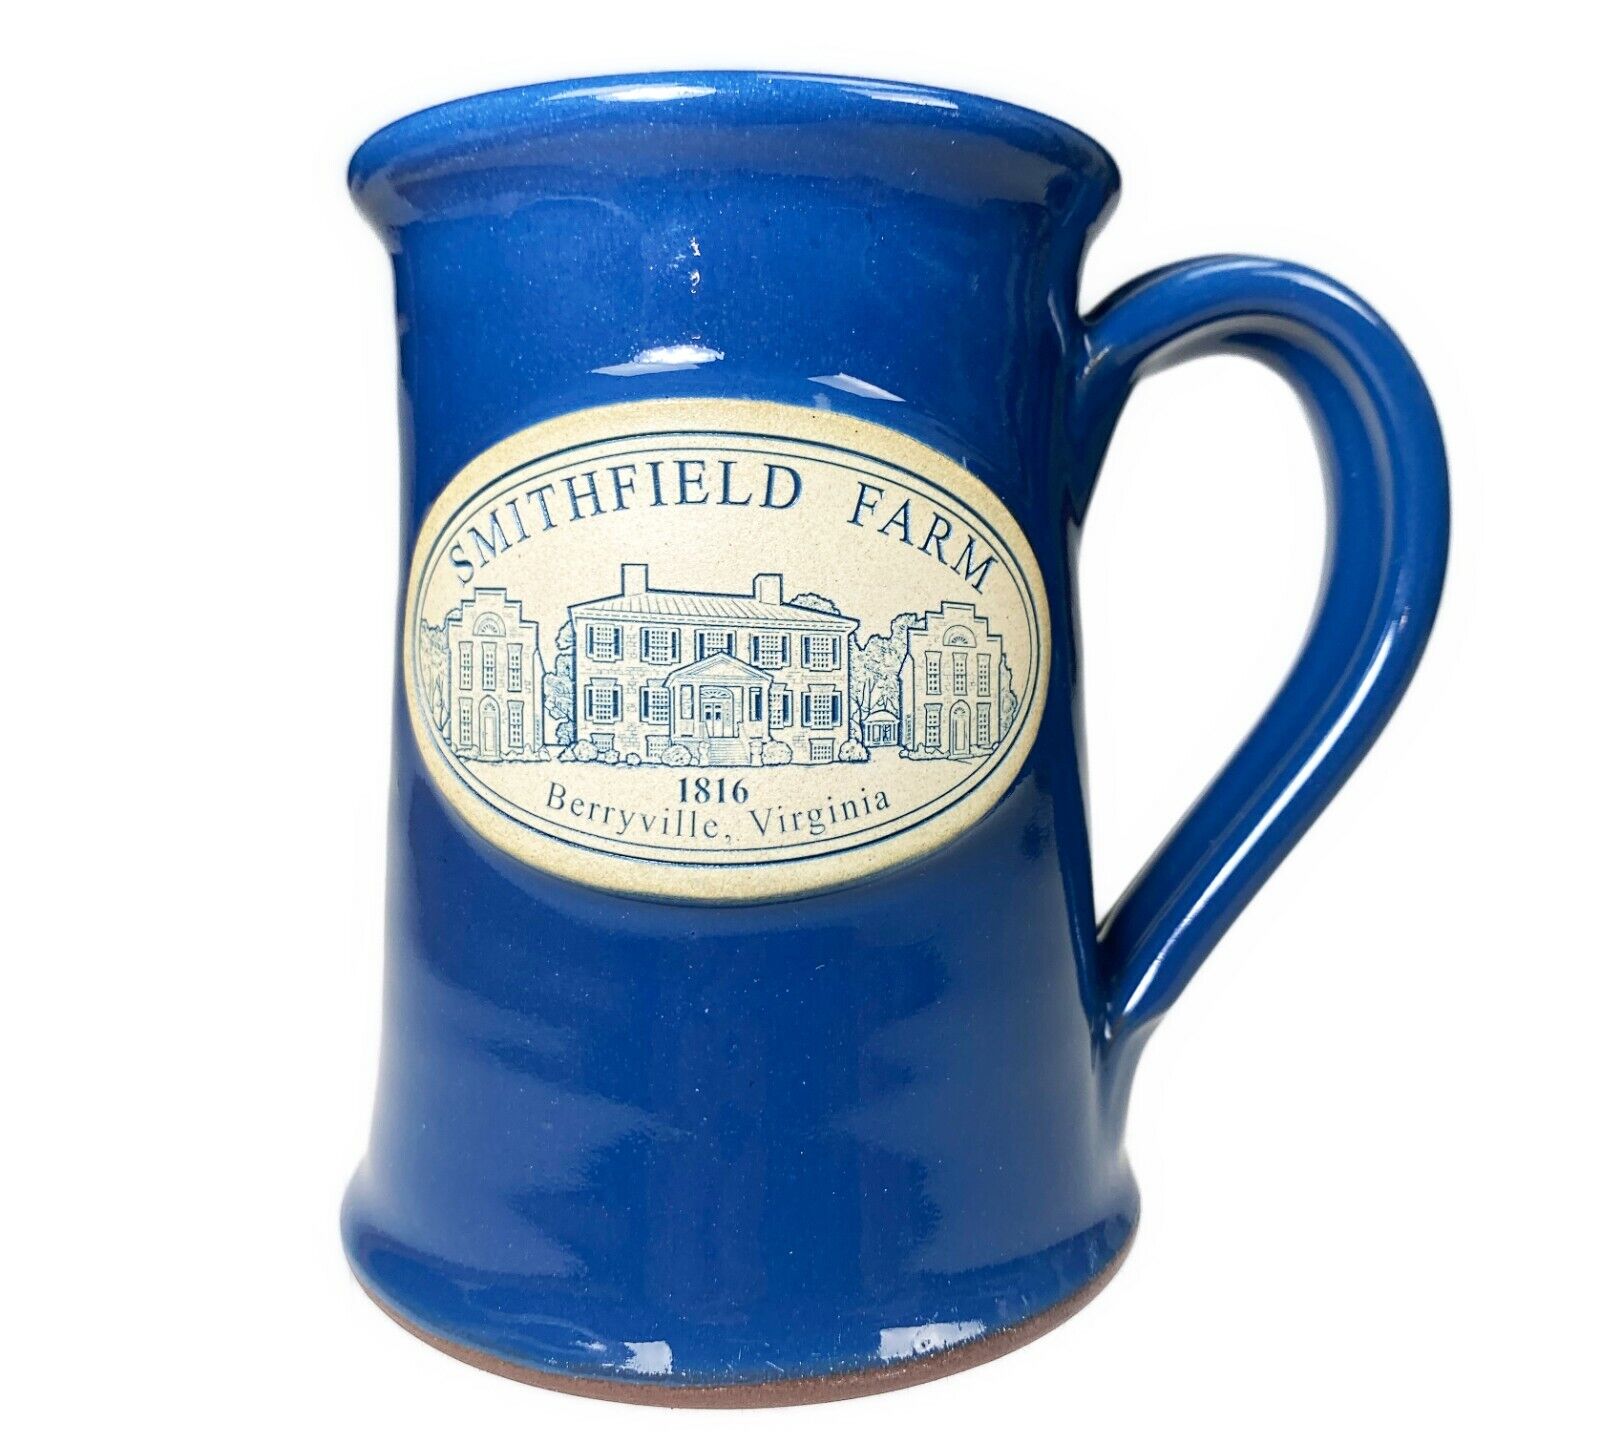 Smithfield Farm 1816 Berryville Virginia Pottery Cup Mug Blue